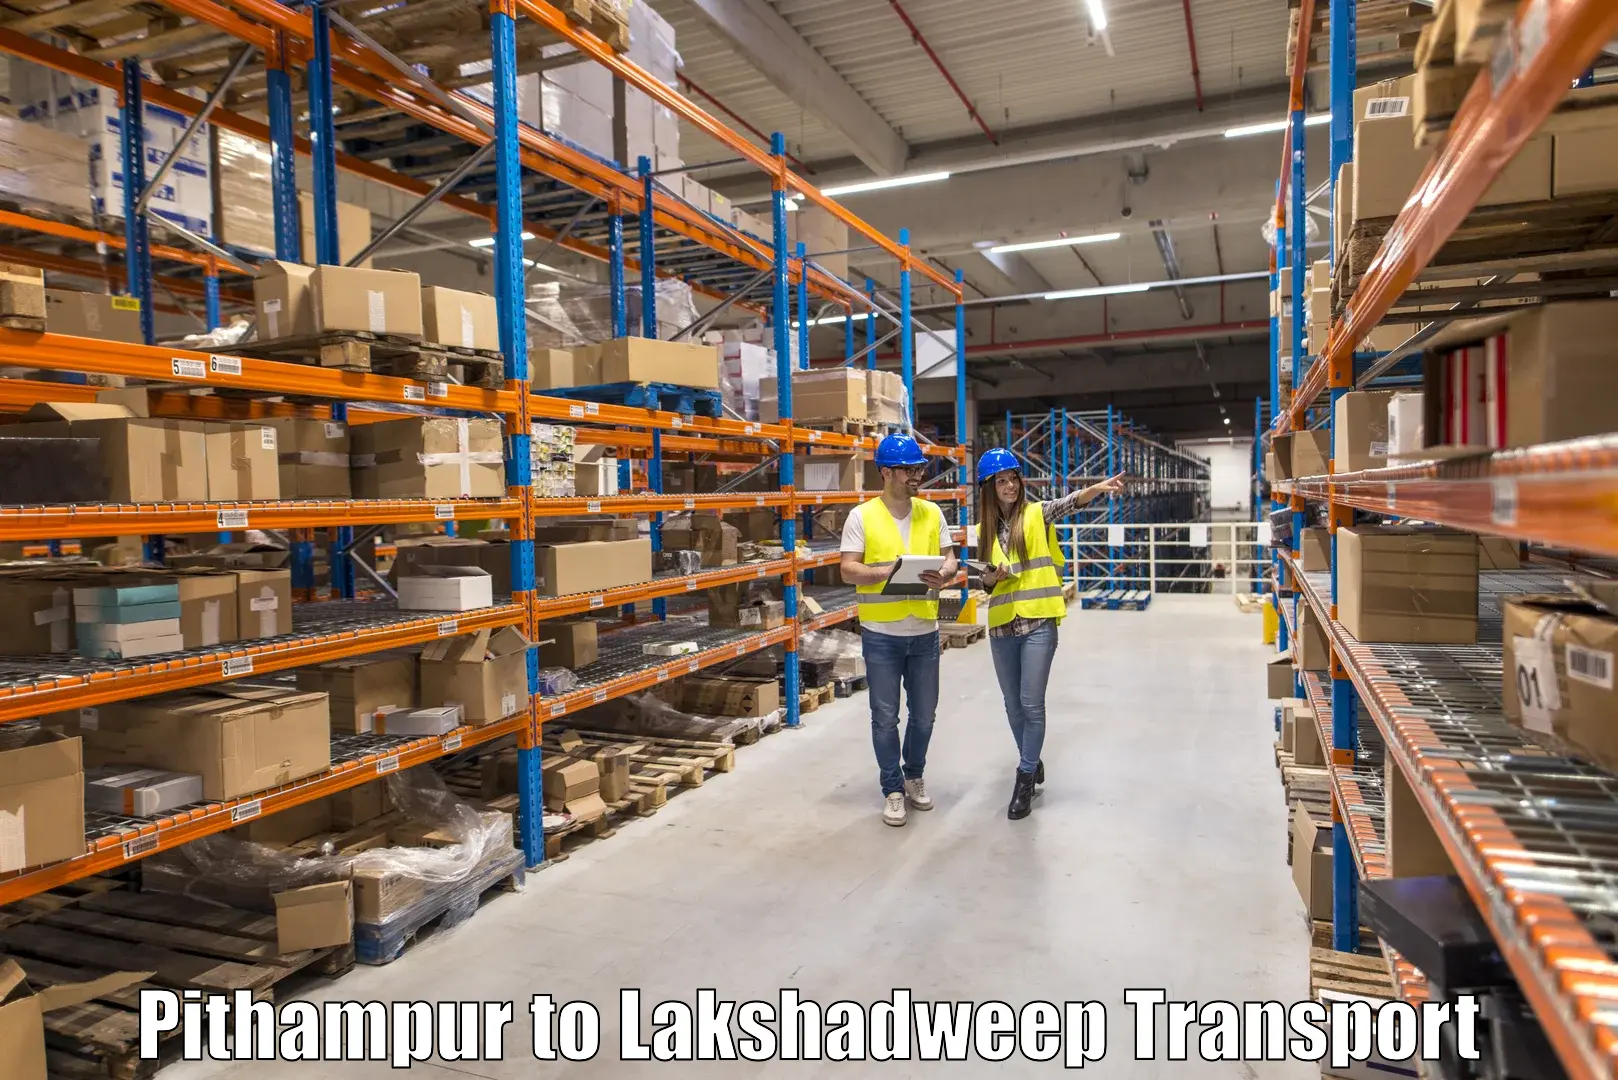 Shipping partner Pithampur to Lakshadweep